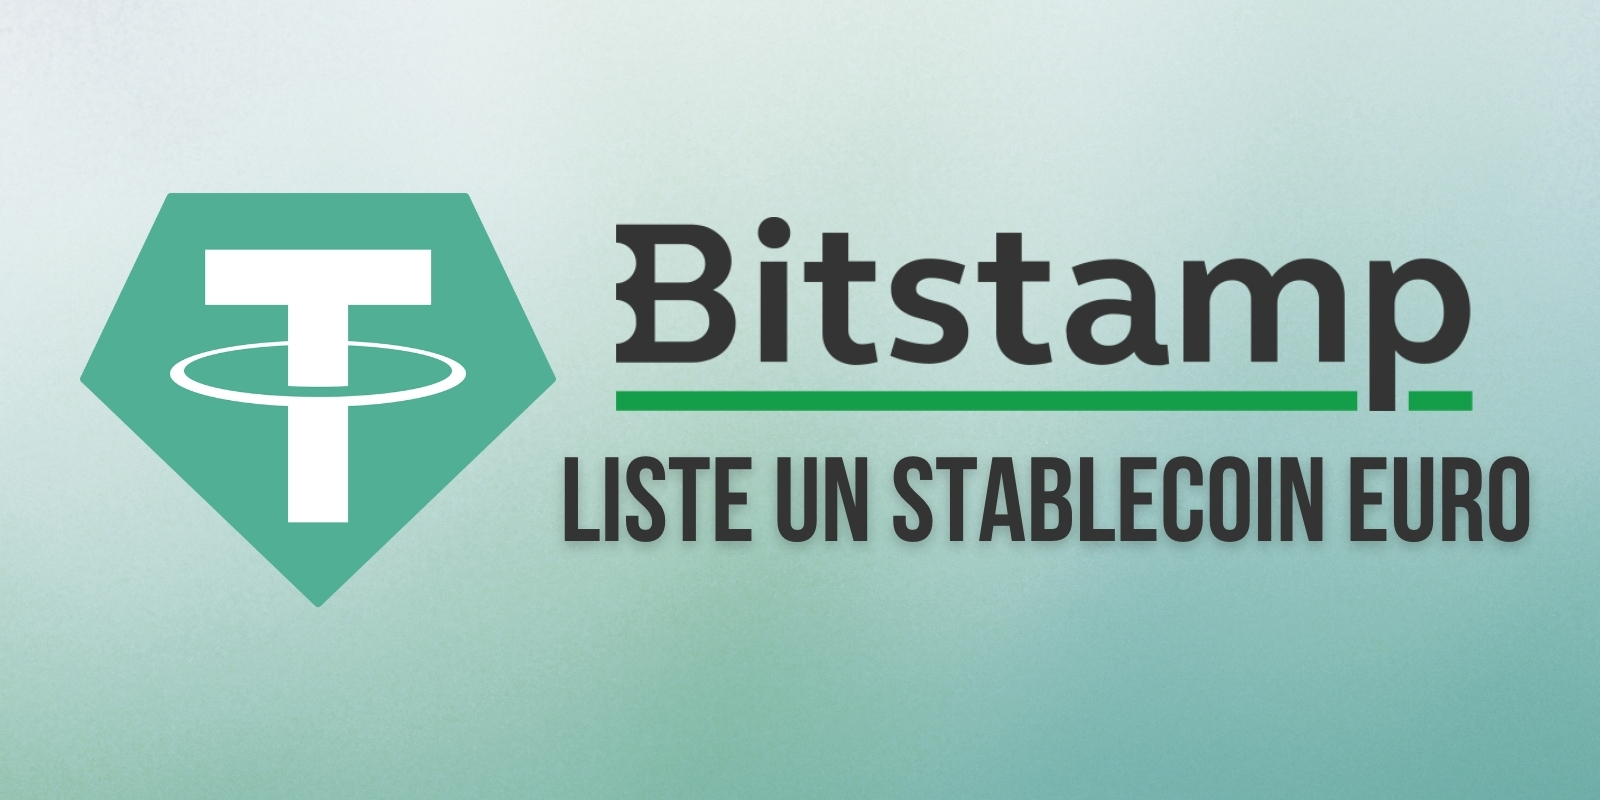 Bitstamp va lister un stablecoin adossé à l'euro : l'EURt de Tether